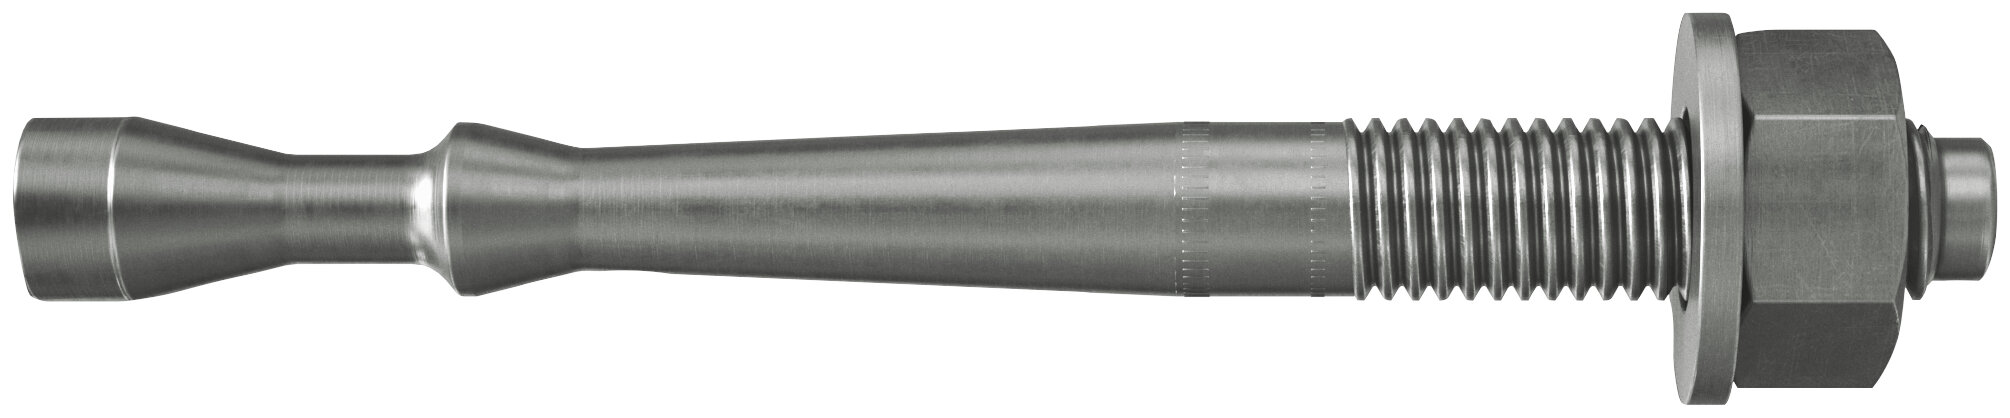 Highbond-Anker FHB II A-S Inject Edelstahl A4